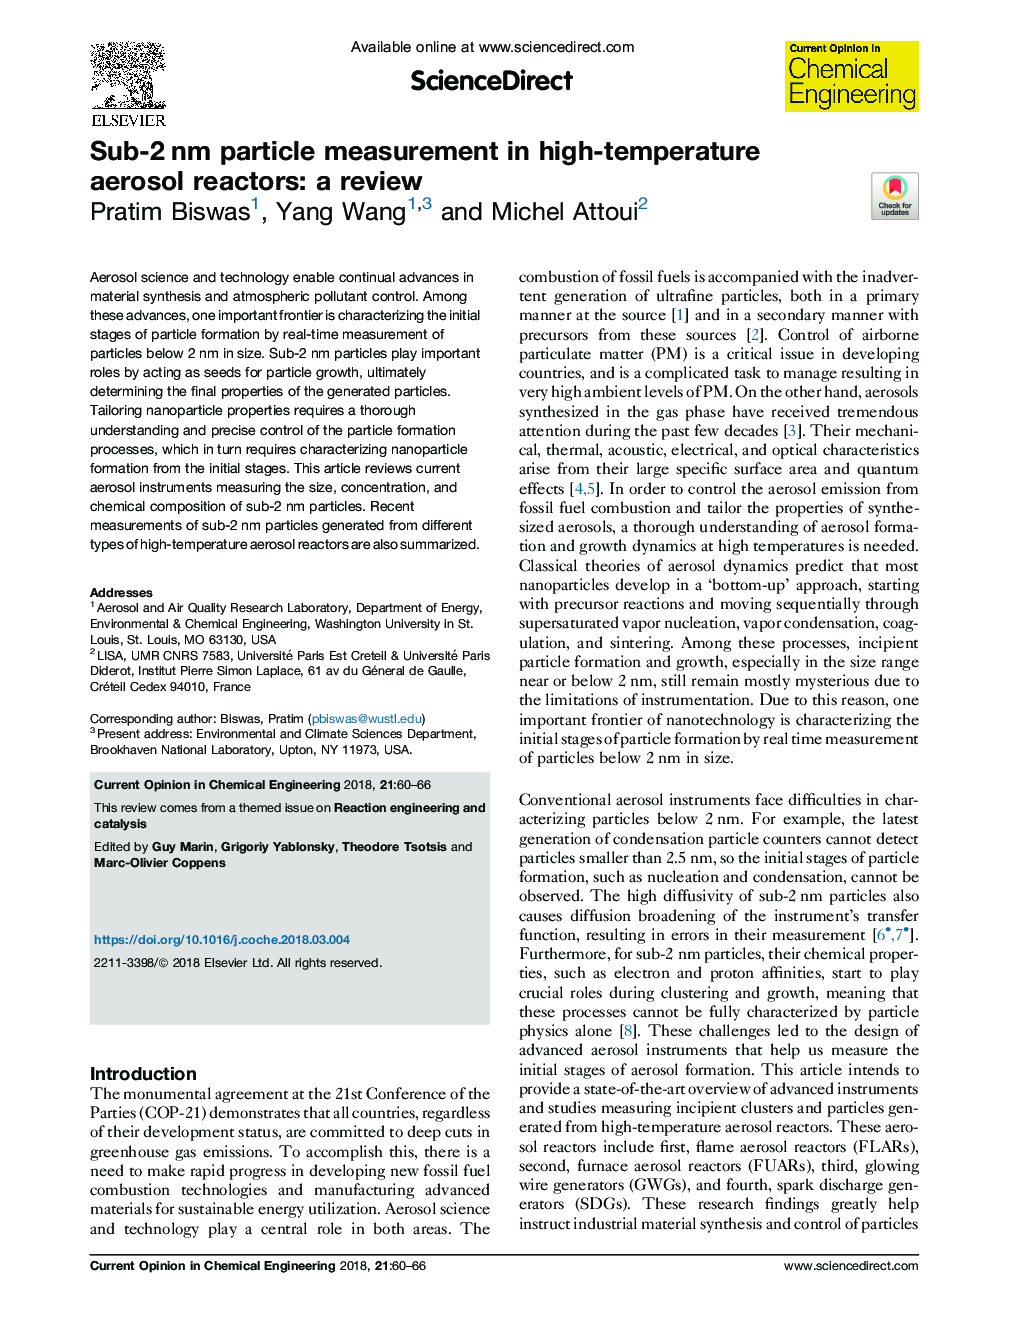 Sub-2Â nm particle measurement in high-temperature aerosol reactors: a review